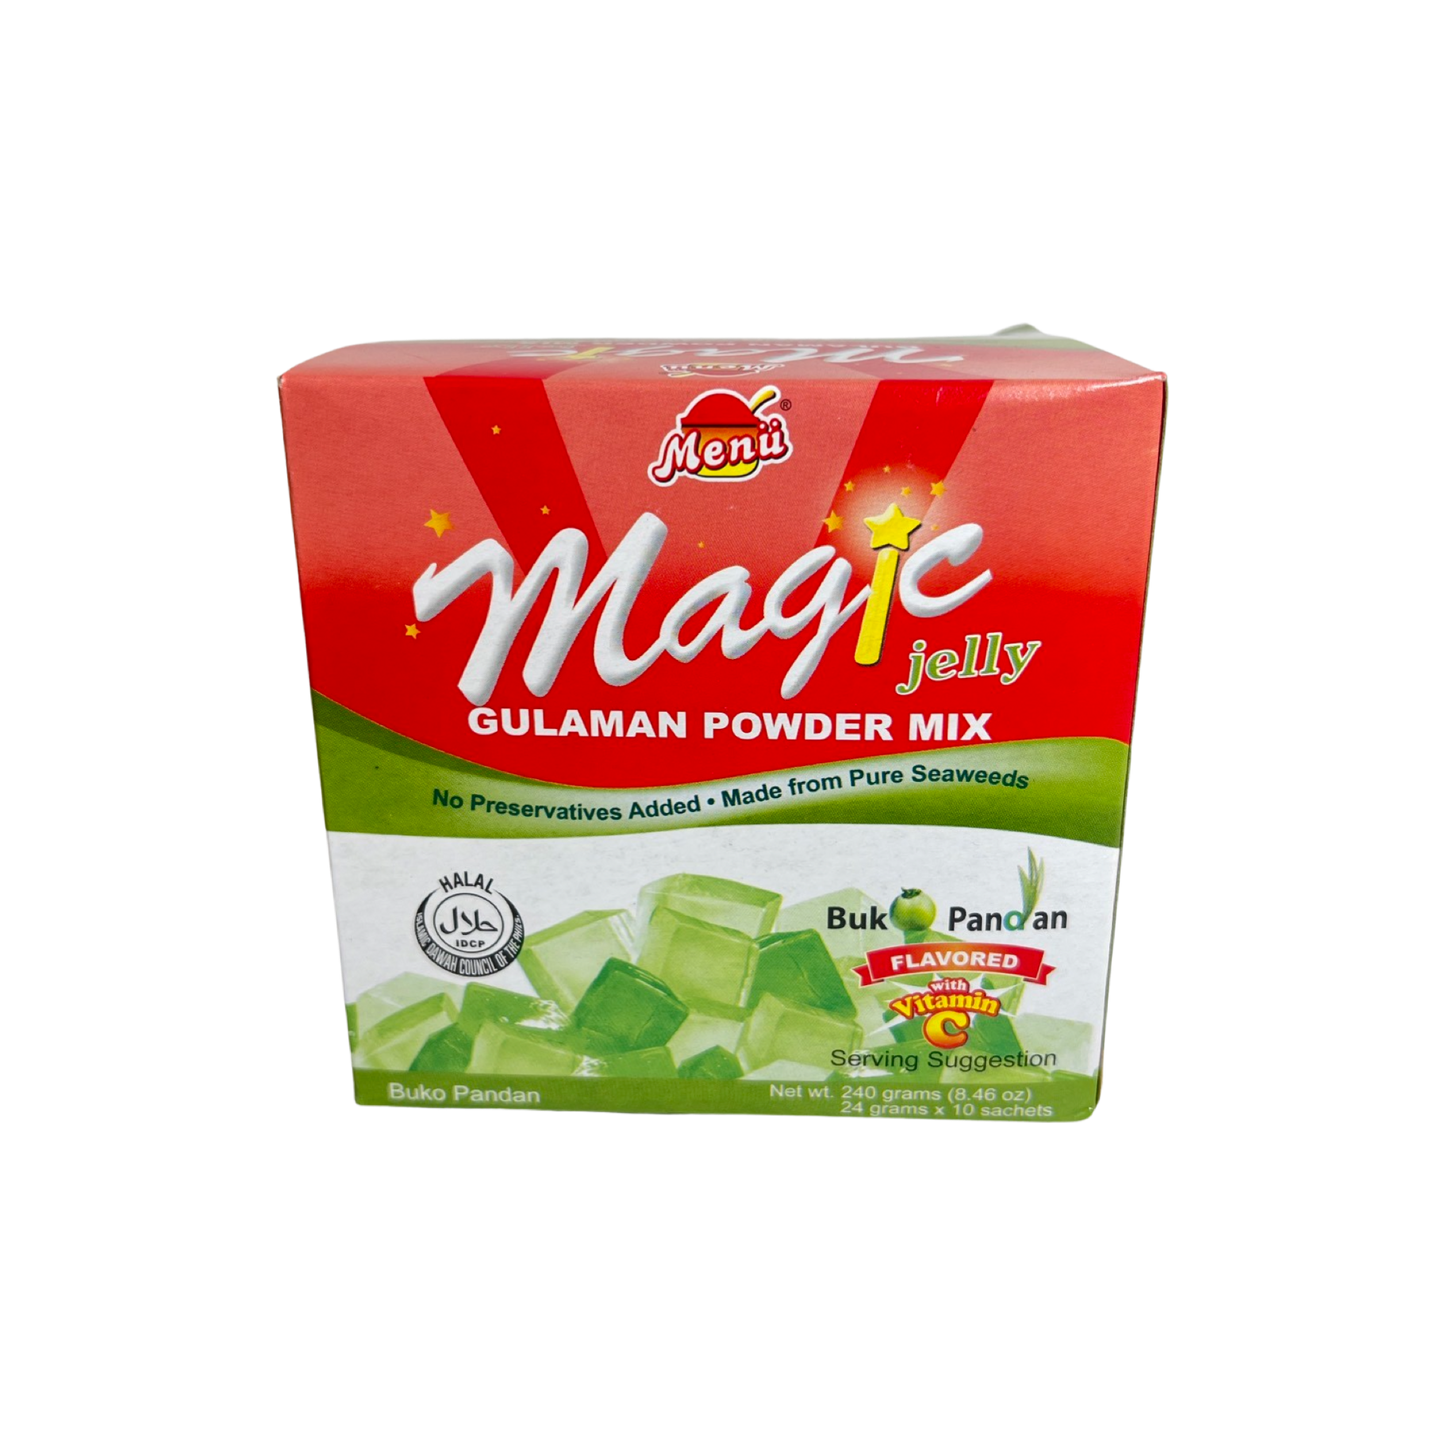 Menu Magic Jelly Gulaman Powder Mix(Buko Pandan Flavored ) 240g 24grams x 10 sachets